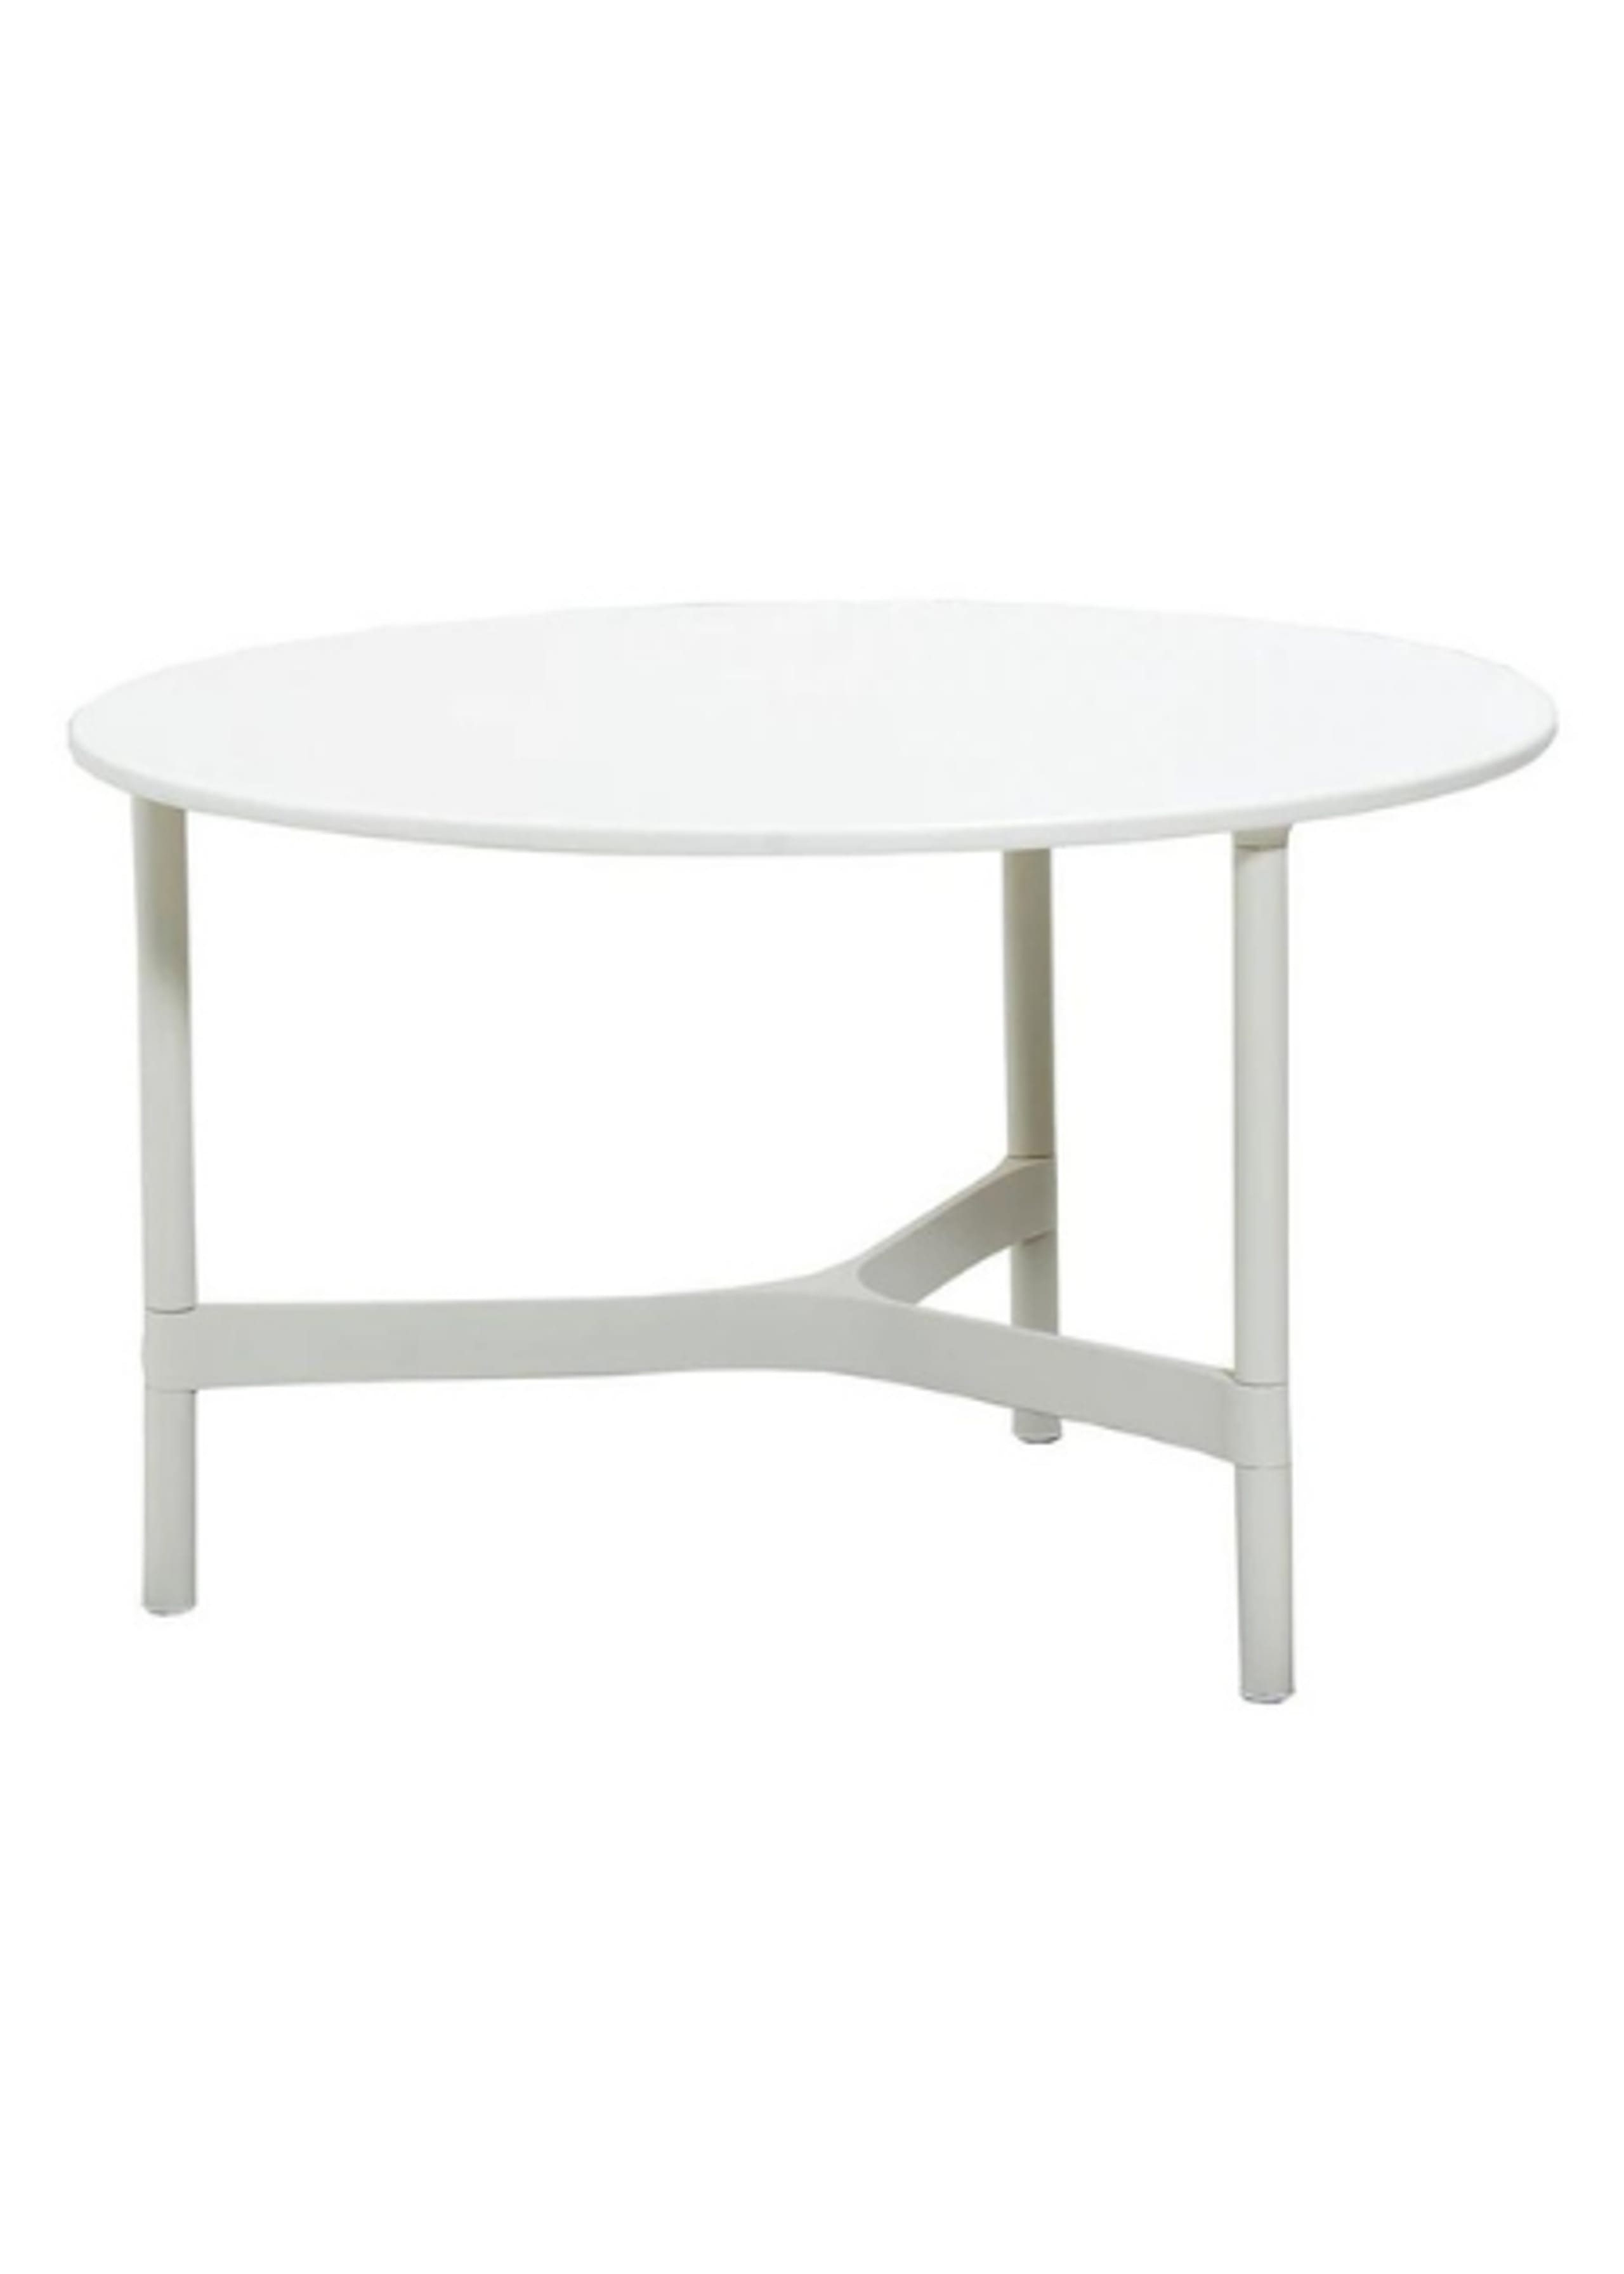 Cane-line - Lounge table - Twist Coffee Table - White, Aluminium / White, Cane-line HI-Core - Medium